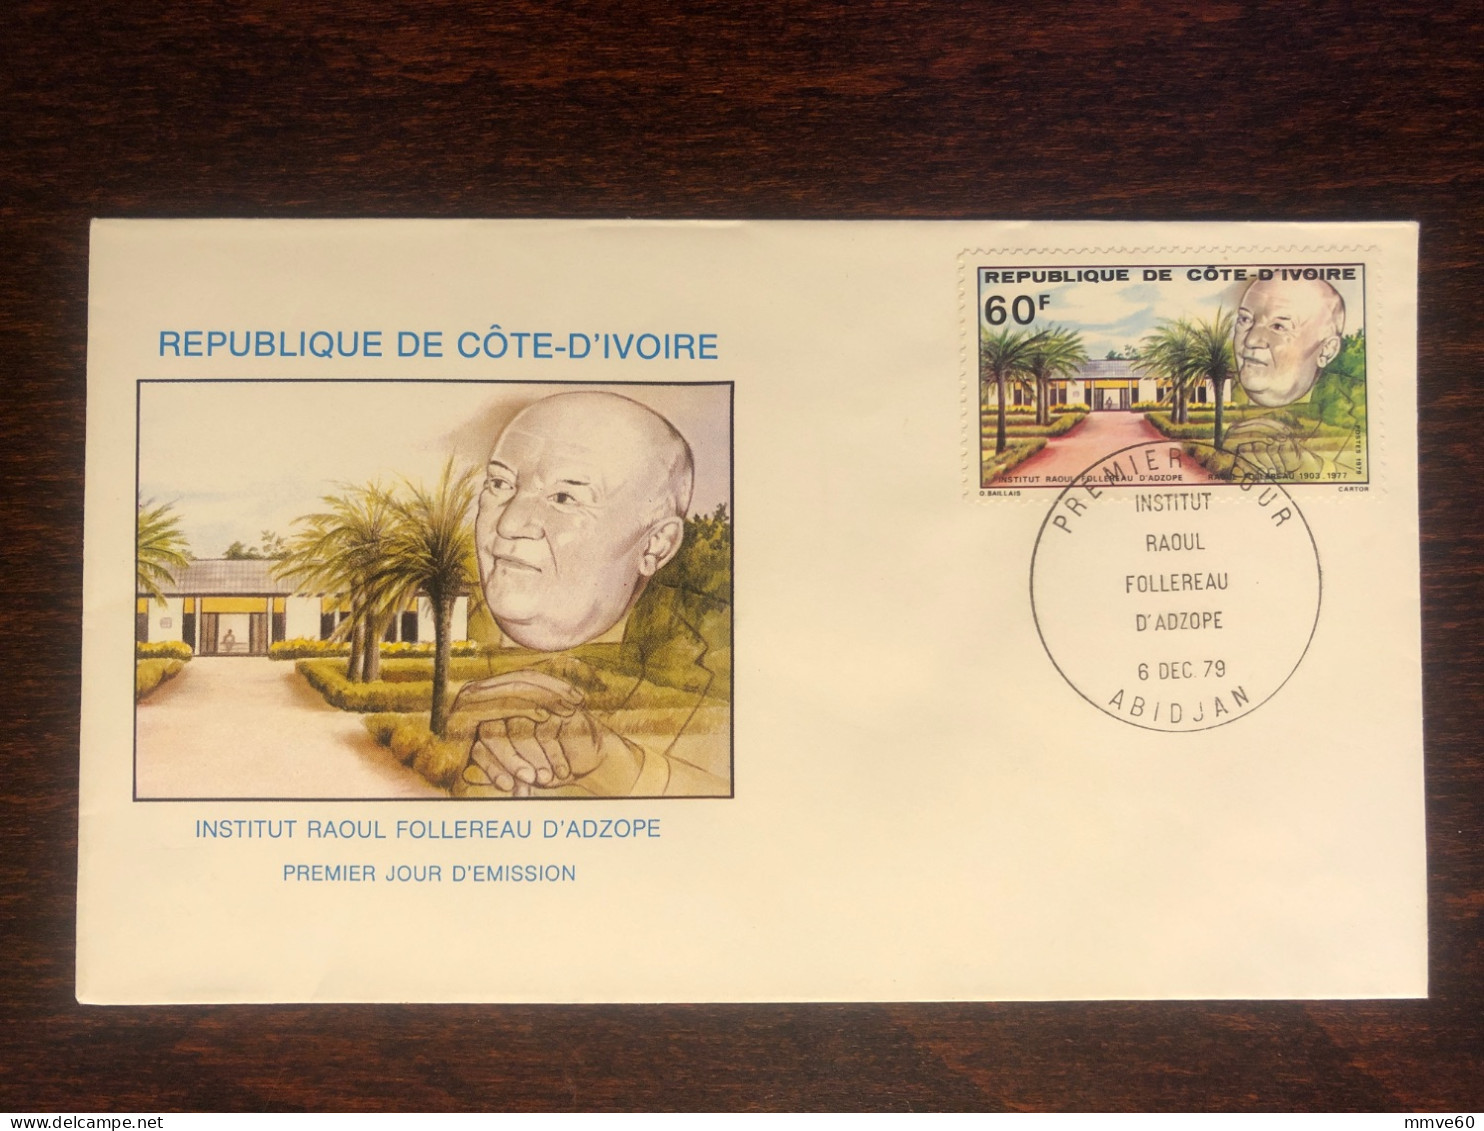 IVORY COAST COTE D’IVOIRE FDC COVER 1979 YEAR LEPROSY LEPRA FOLLEREAU HEALTH MEDICINE STAMPS - Ivory Coast (1960-...)